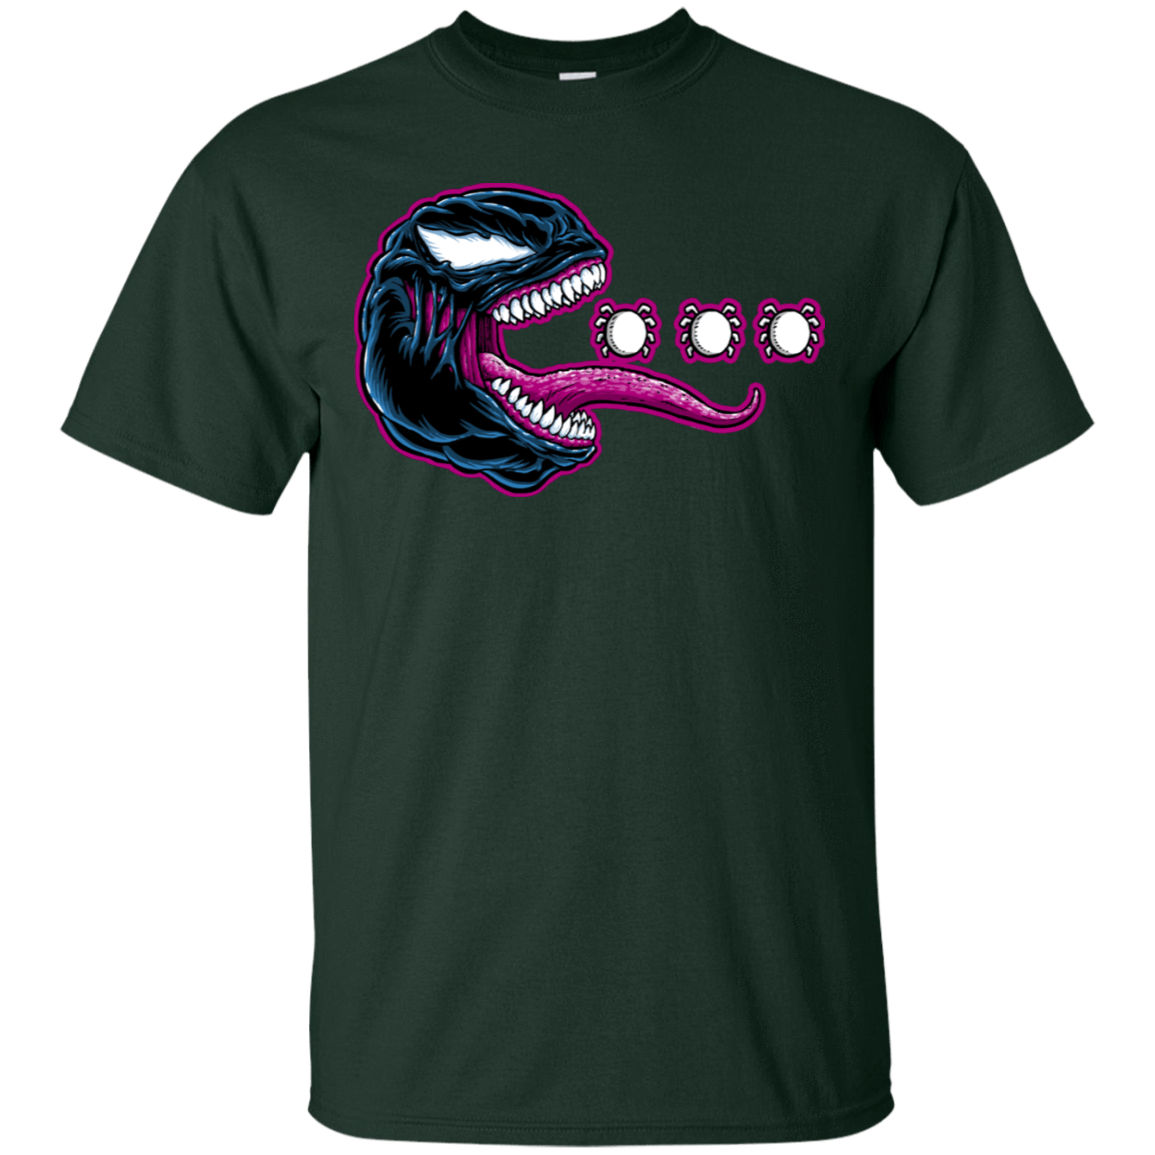 T-Shirts Forest / S Pac Venom T-Shirt